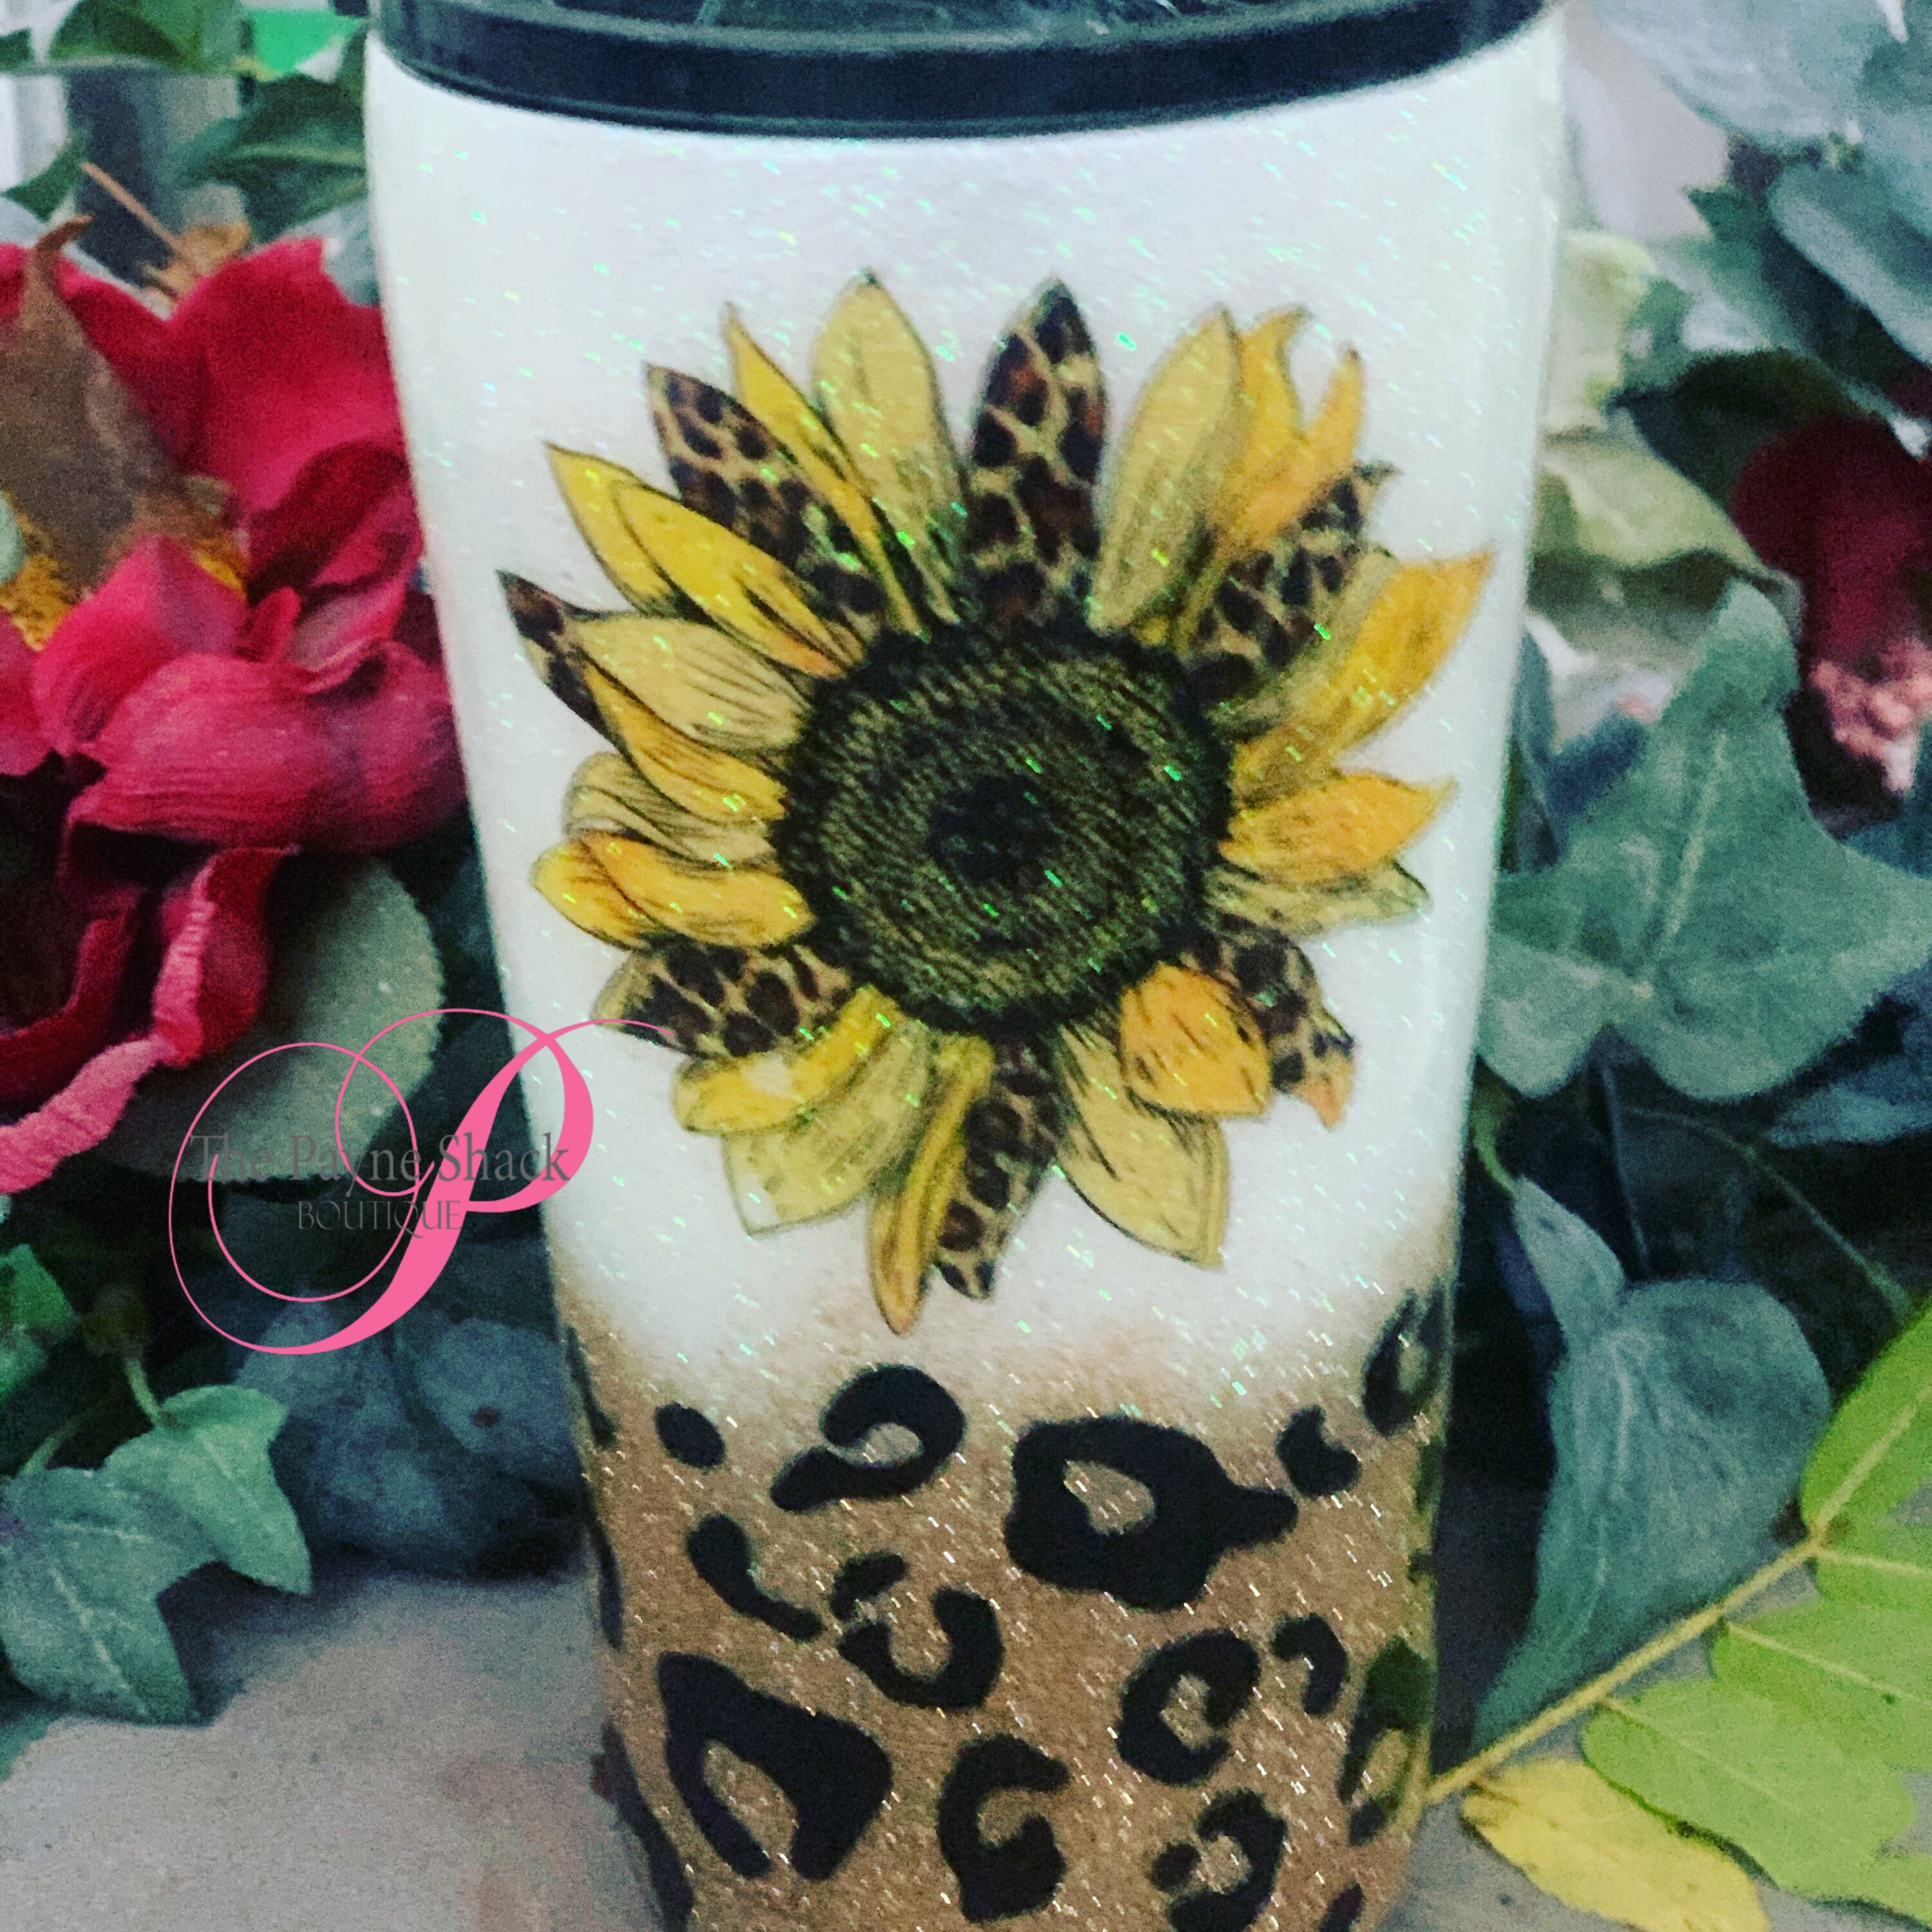 Moon and sunflower engraved Yeti – Vapor Artistry